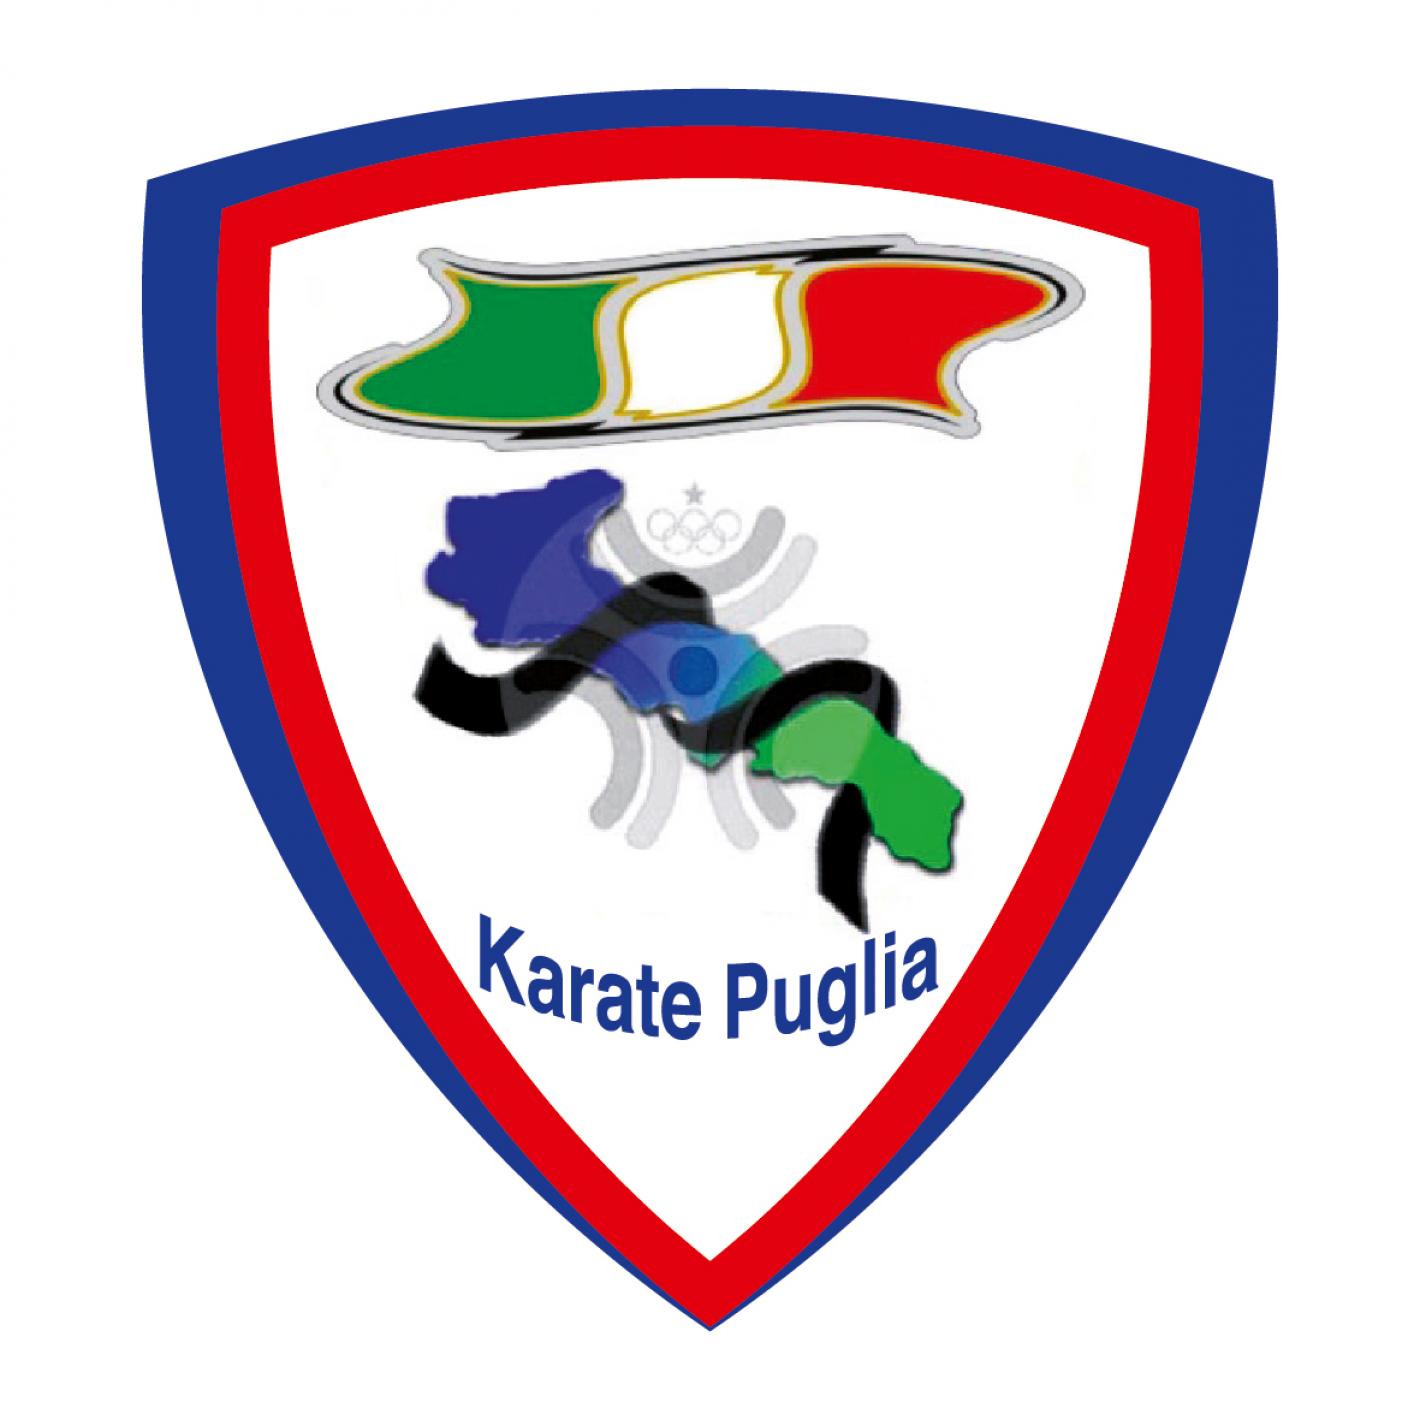 images/medium/logo_Karate_puglia.jpg